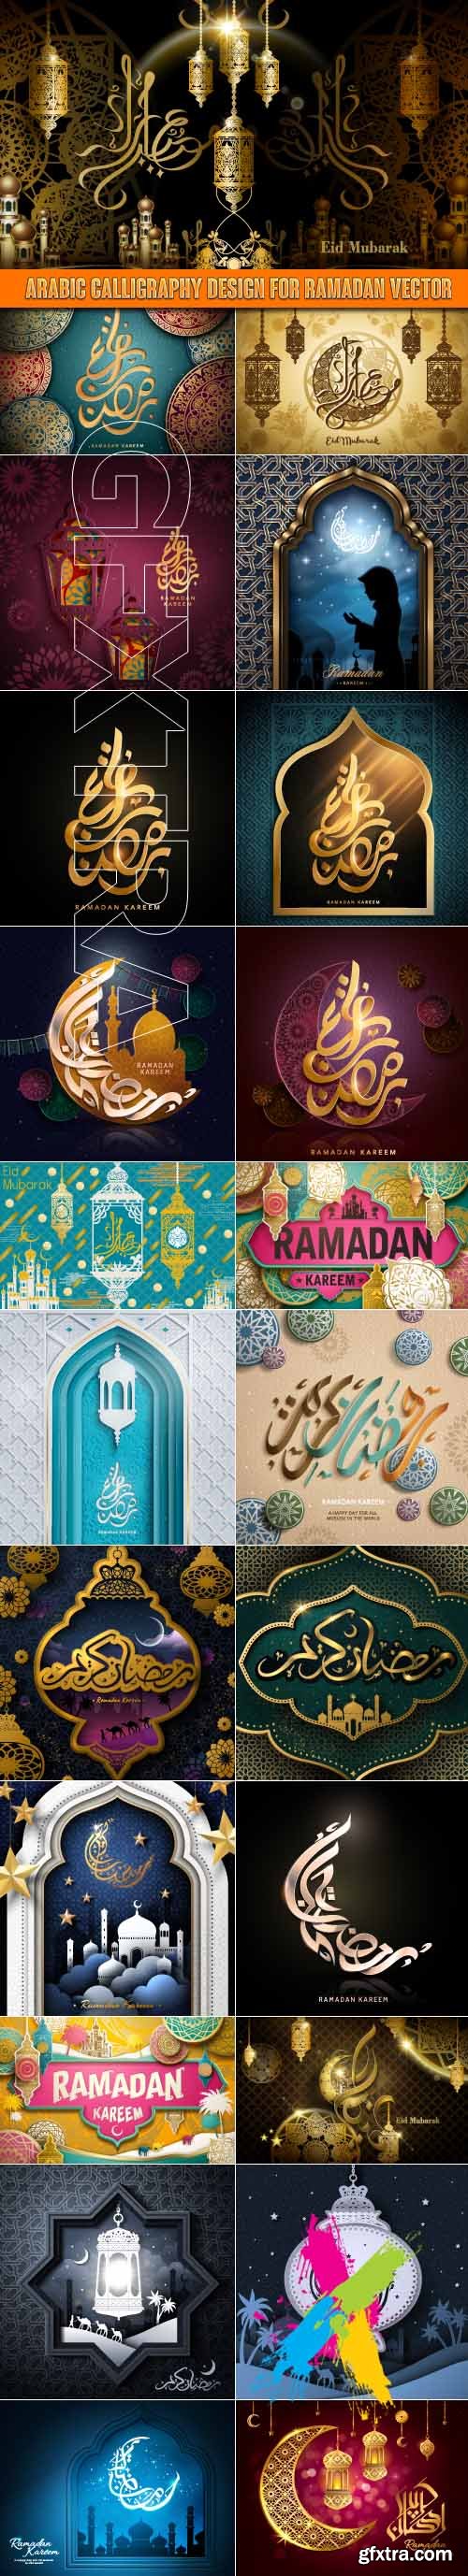 Arabic calligraphy design for Ramadan vector